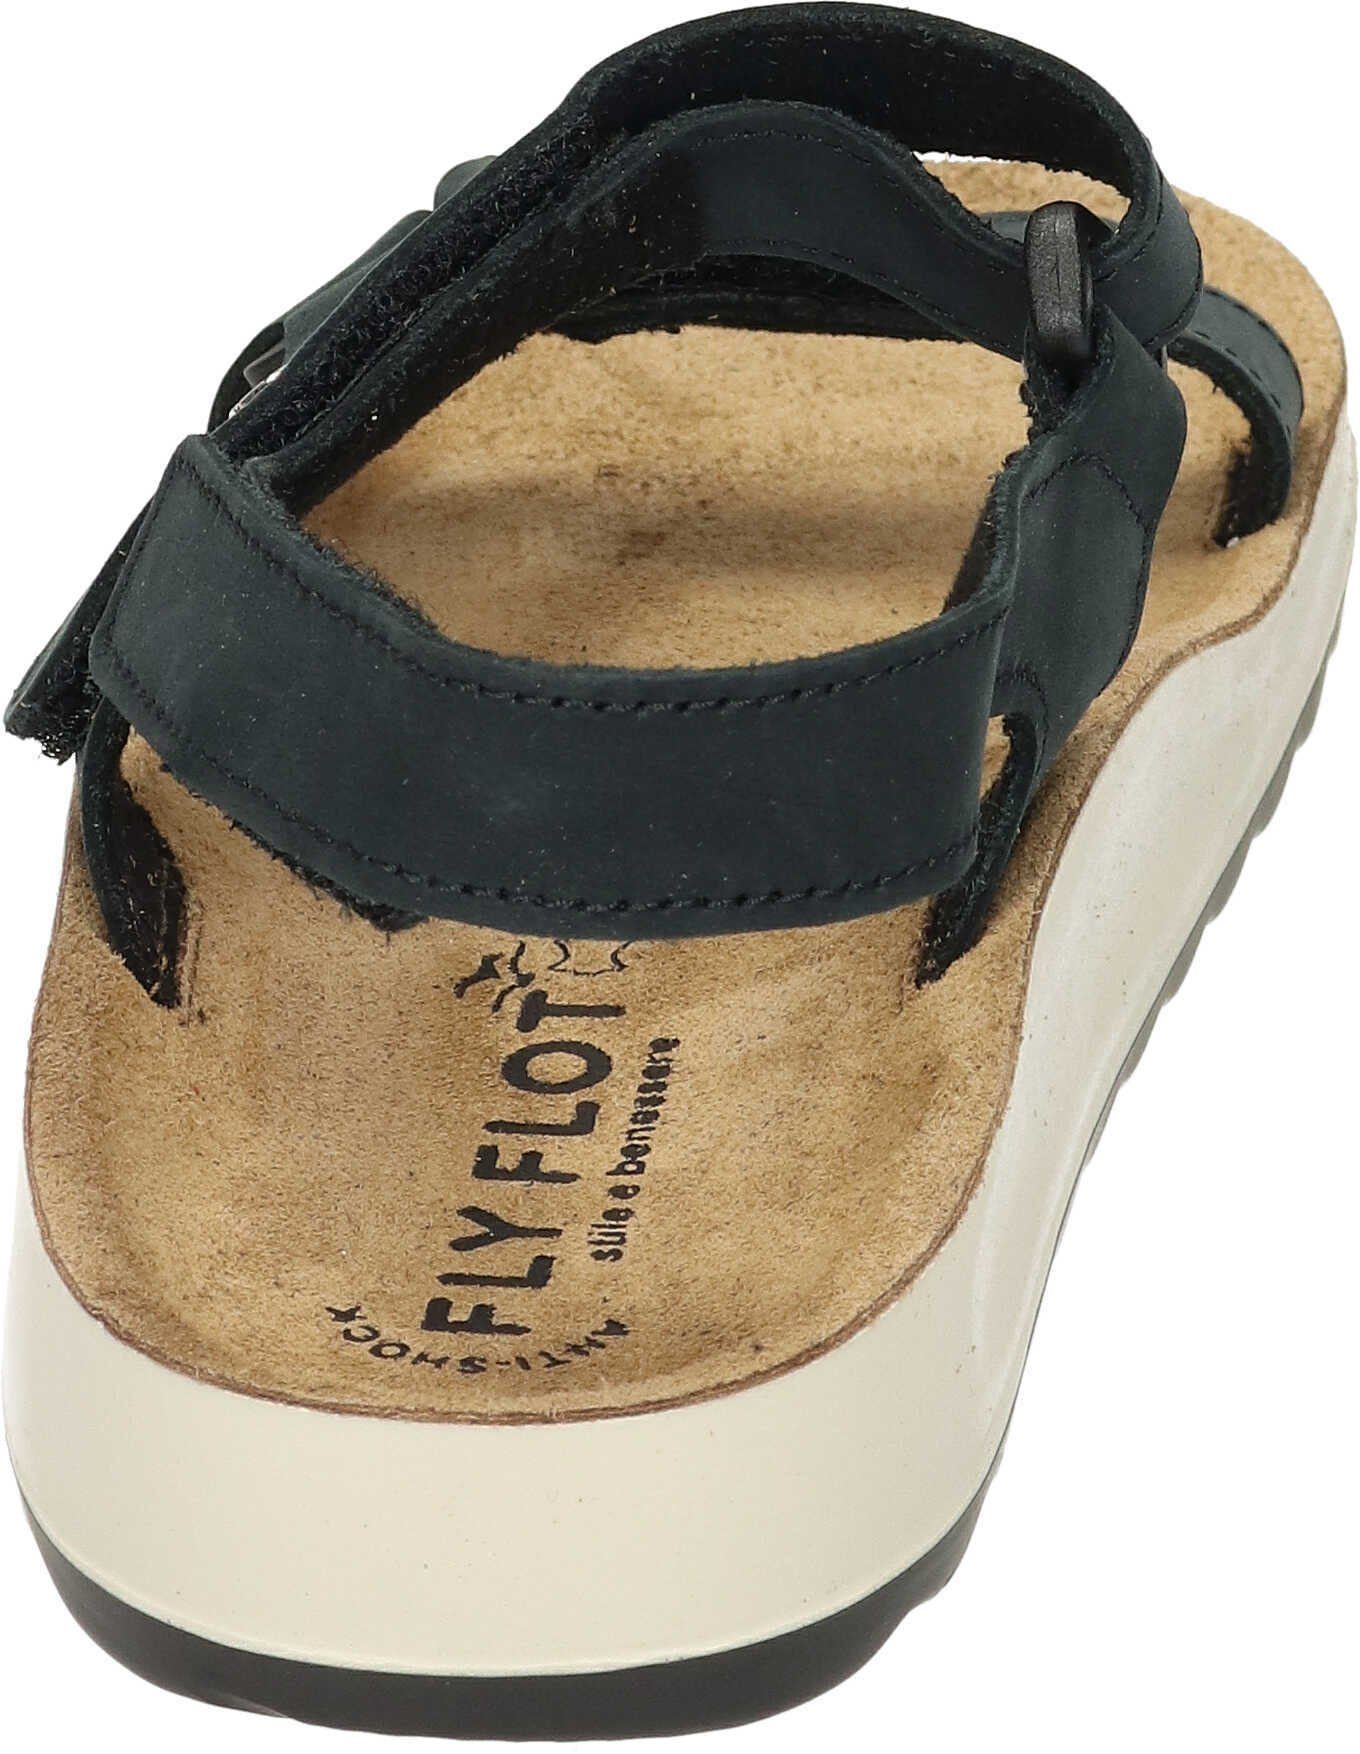 Fly Flot Sandalen aus Nubukleder schwarz Sandalette